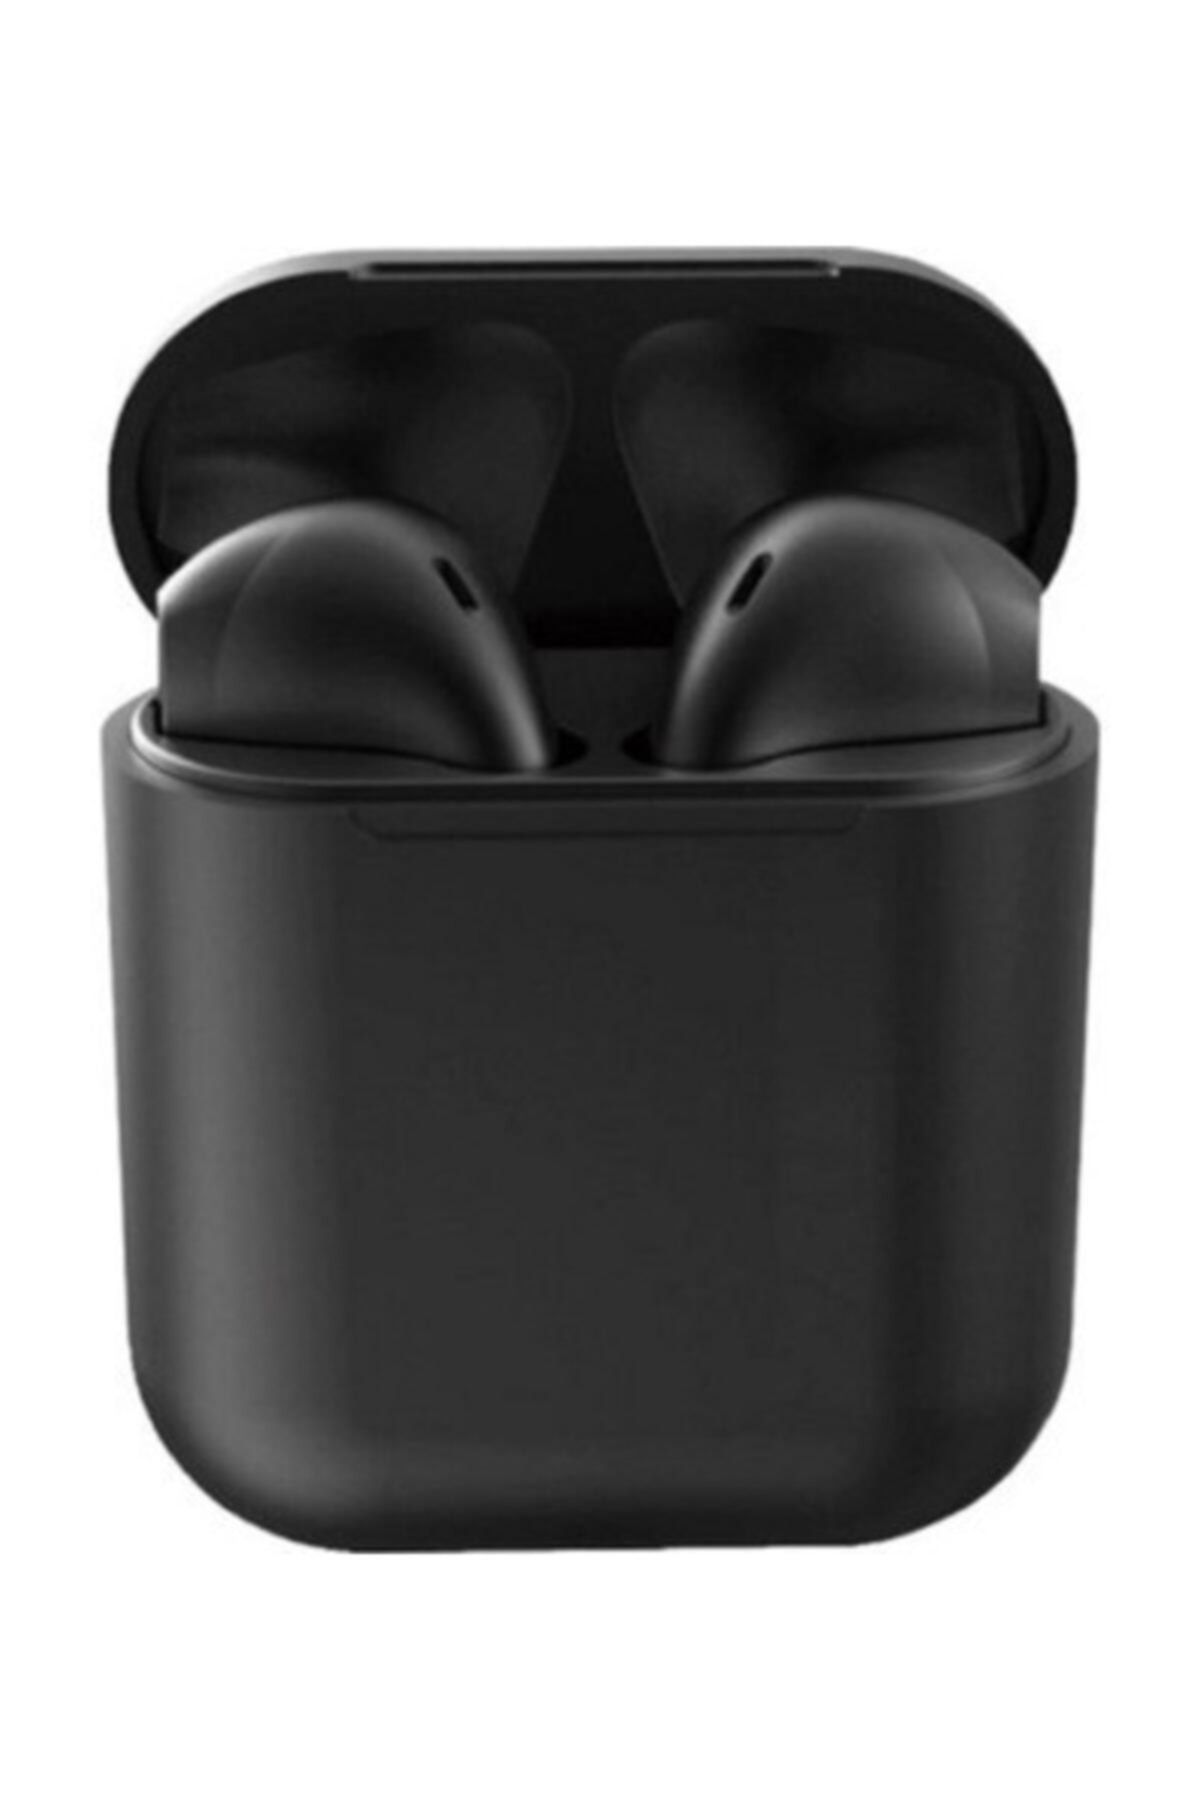 Torima I12 Uyumlu Bluetooth Kablosuz Kulaklık Pop Up 5.0 Stereo - Şarj Üniteli Siyah